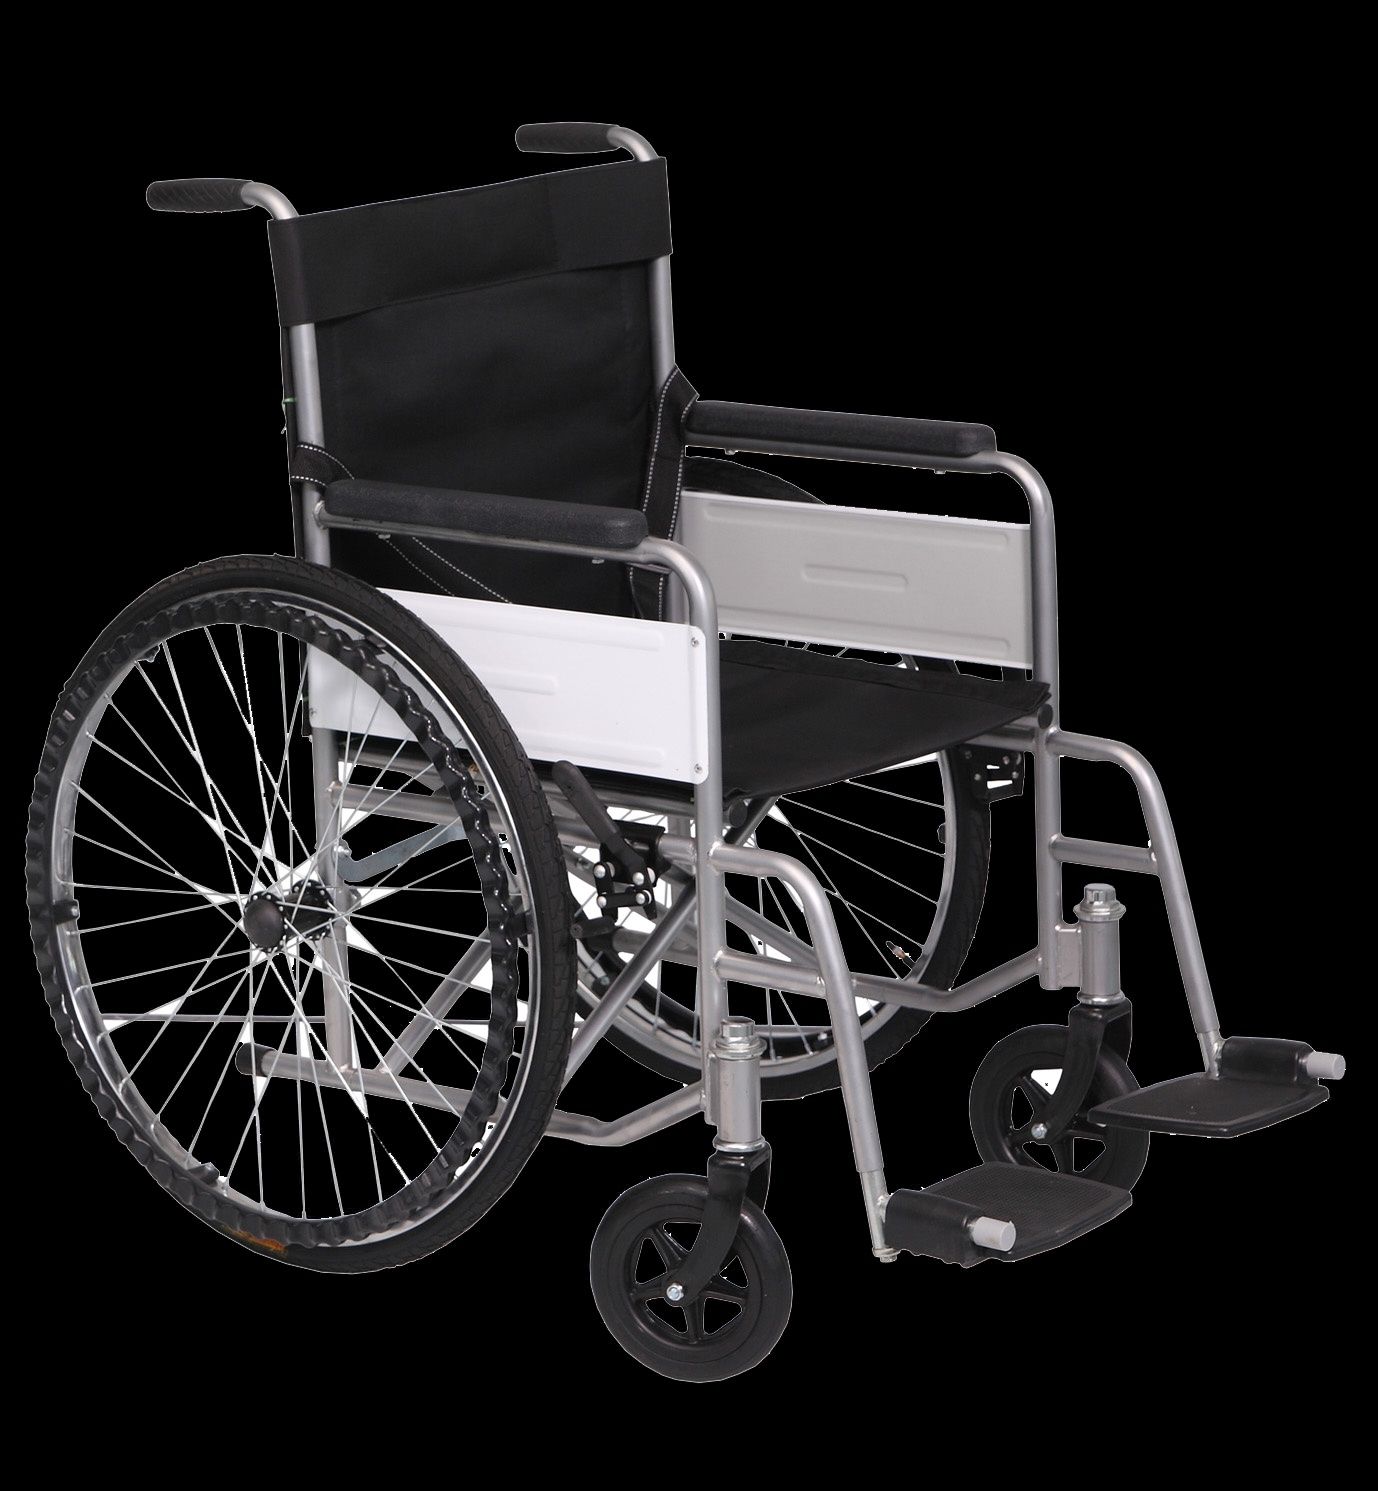 Nogironlar aravachasi инвалидная коляска N 22